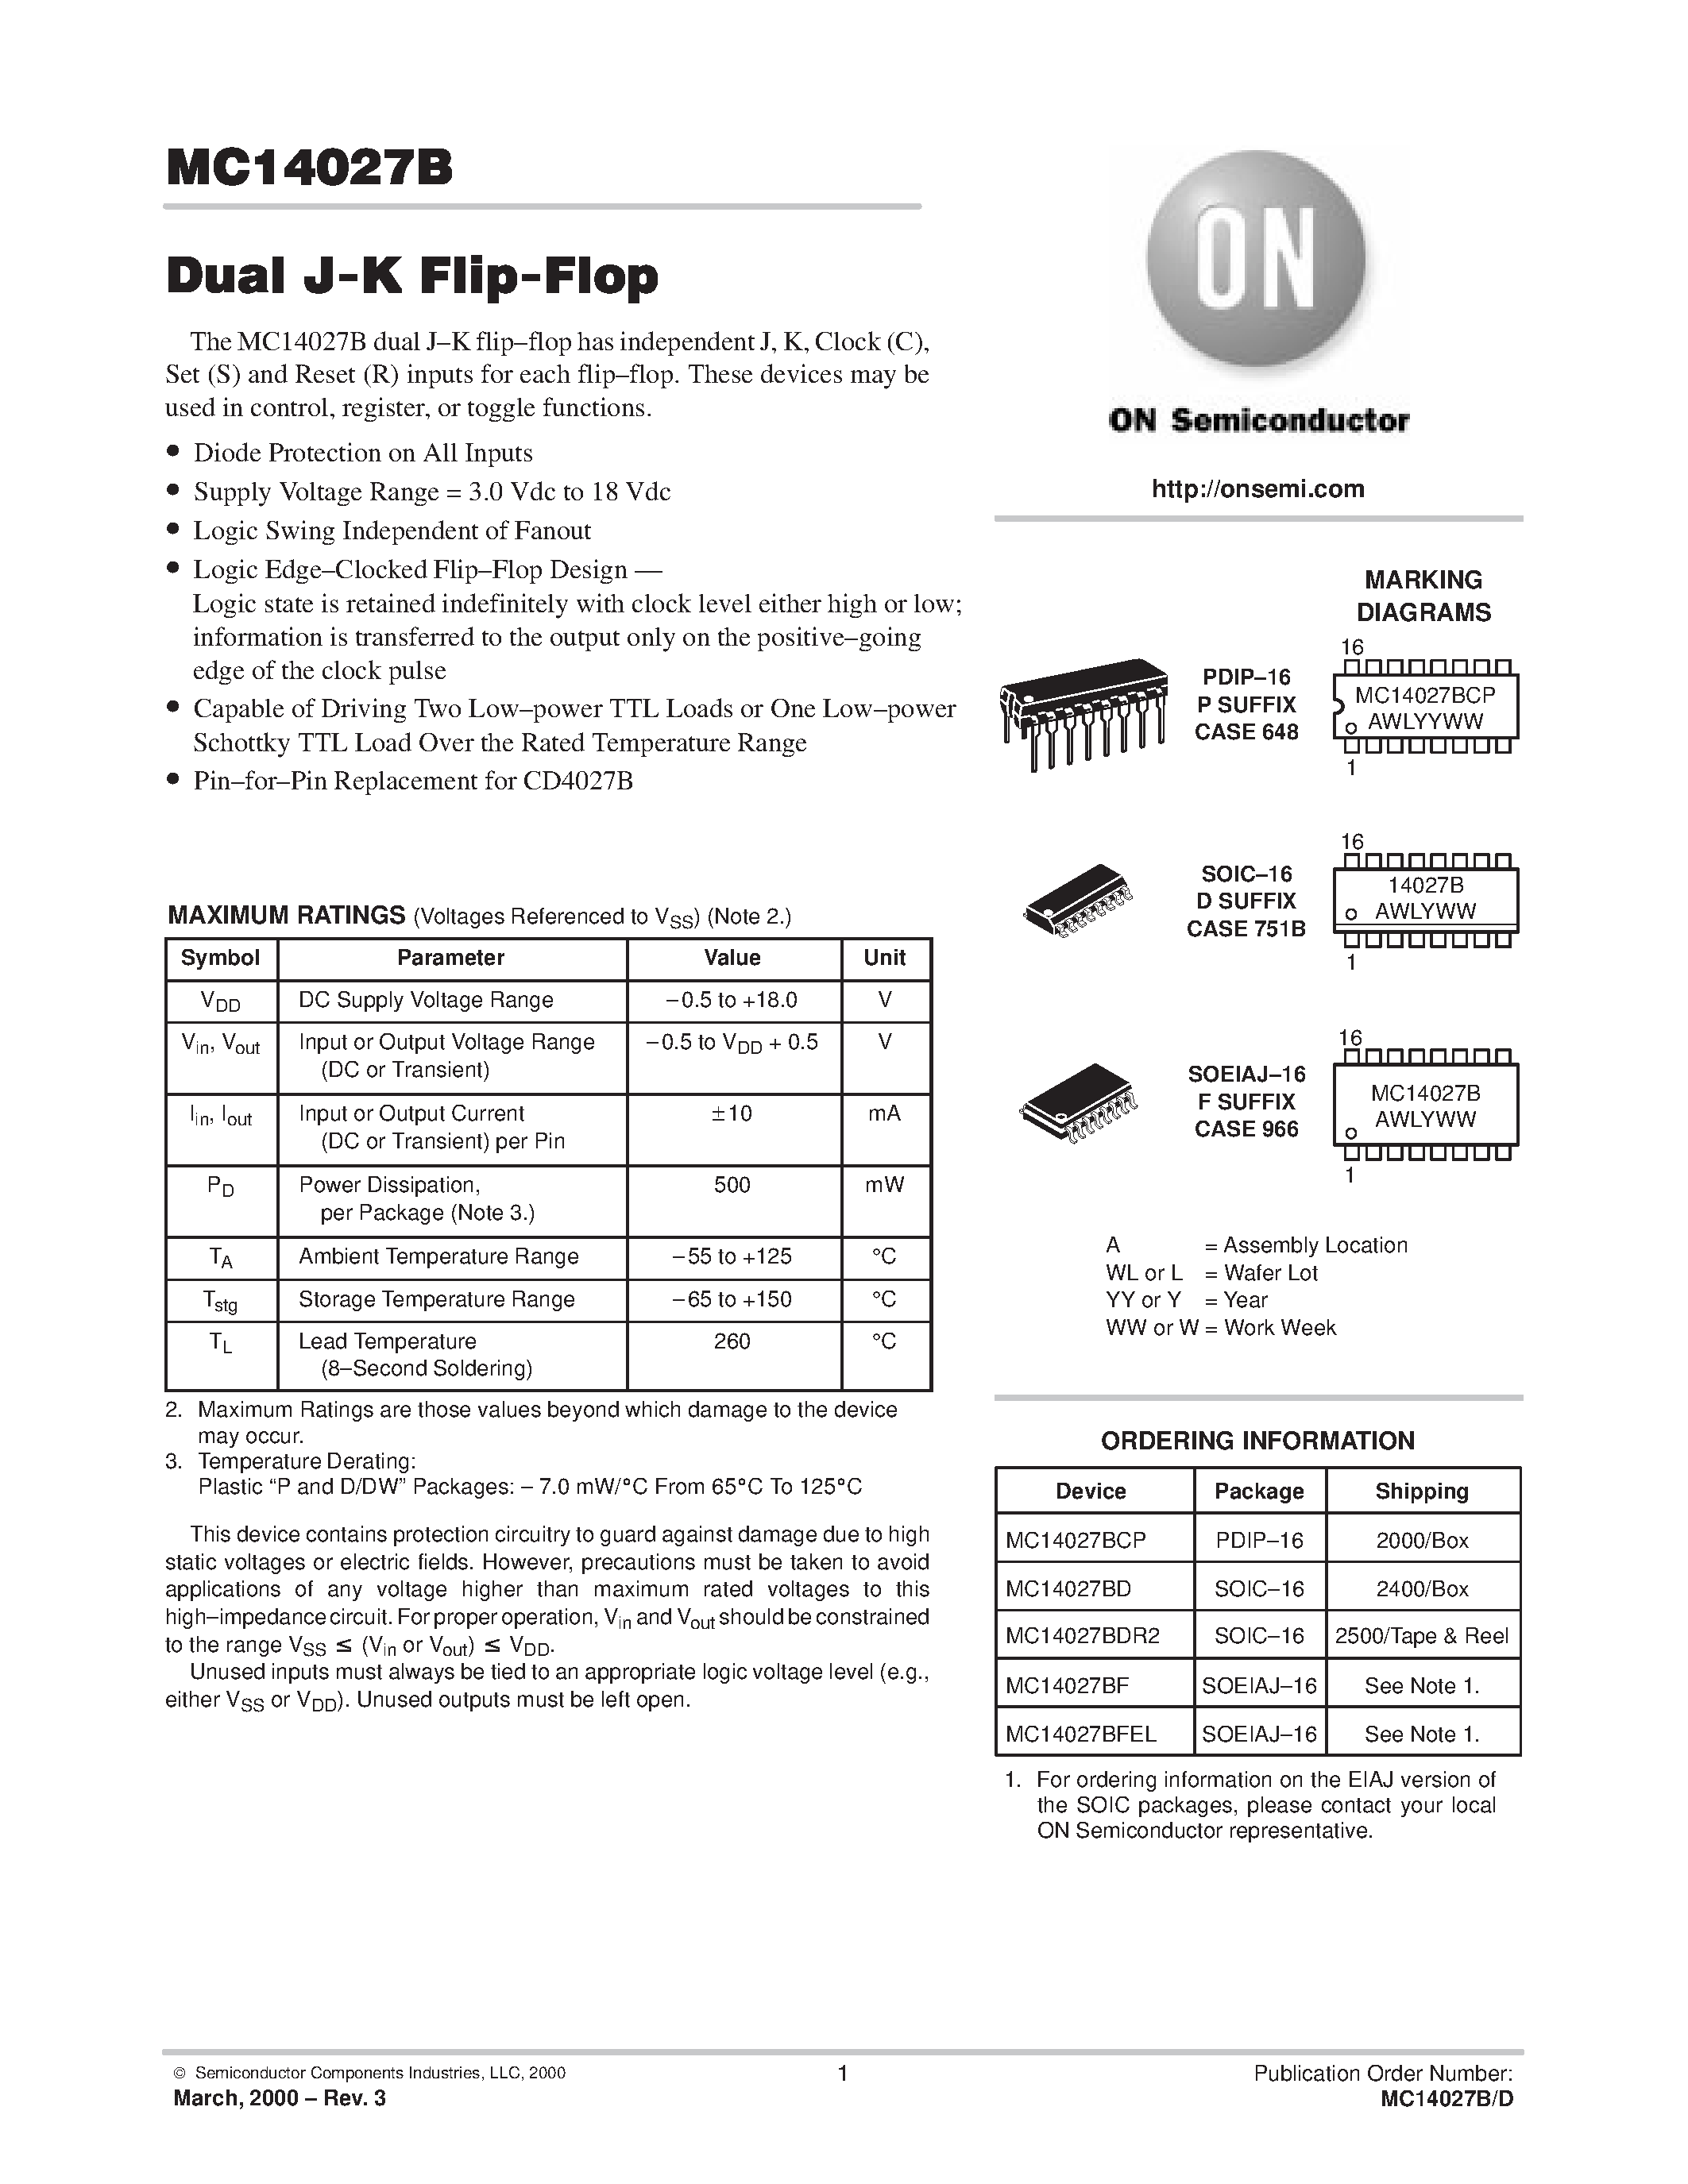 Datasheet MC14027BFEL - Dual J-K Flip-Flop page 1